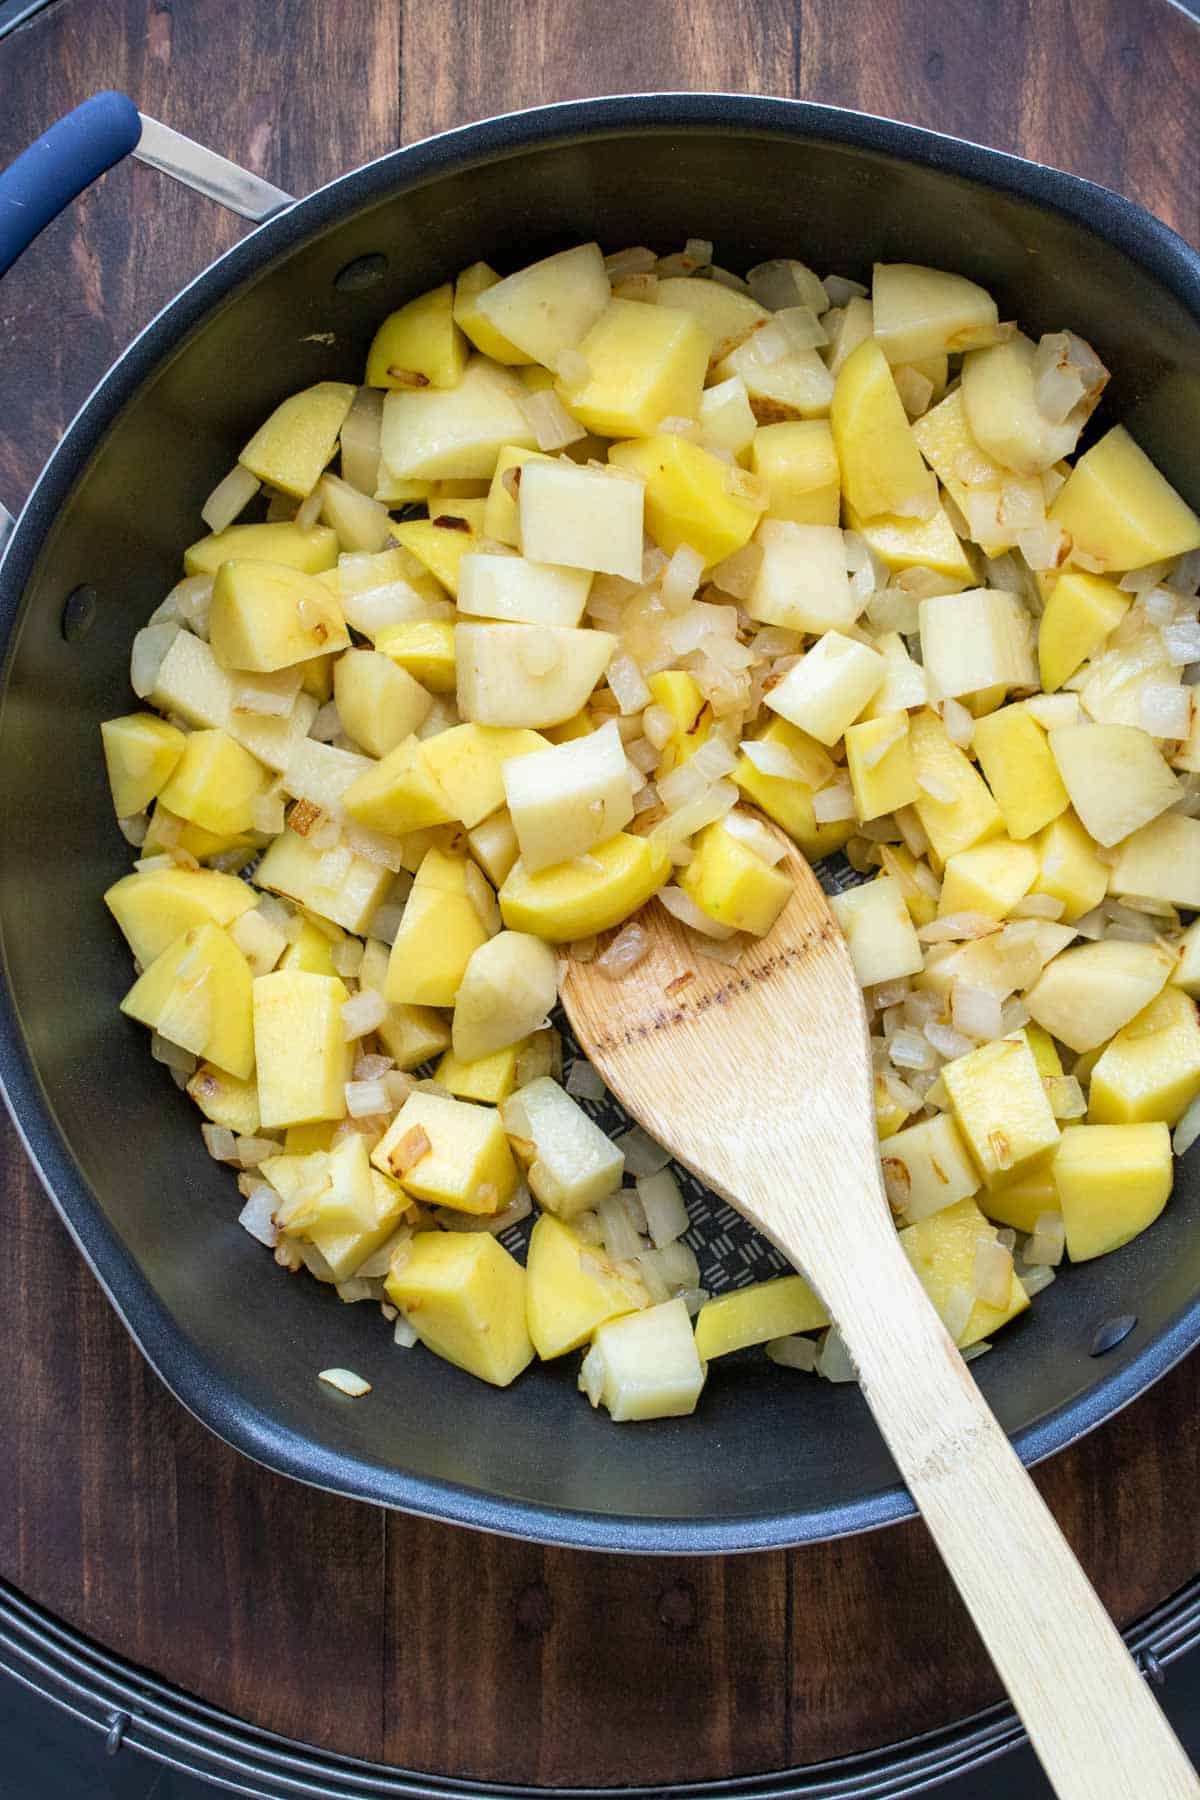 Wooden spoon mixing cut potatoes in a pan